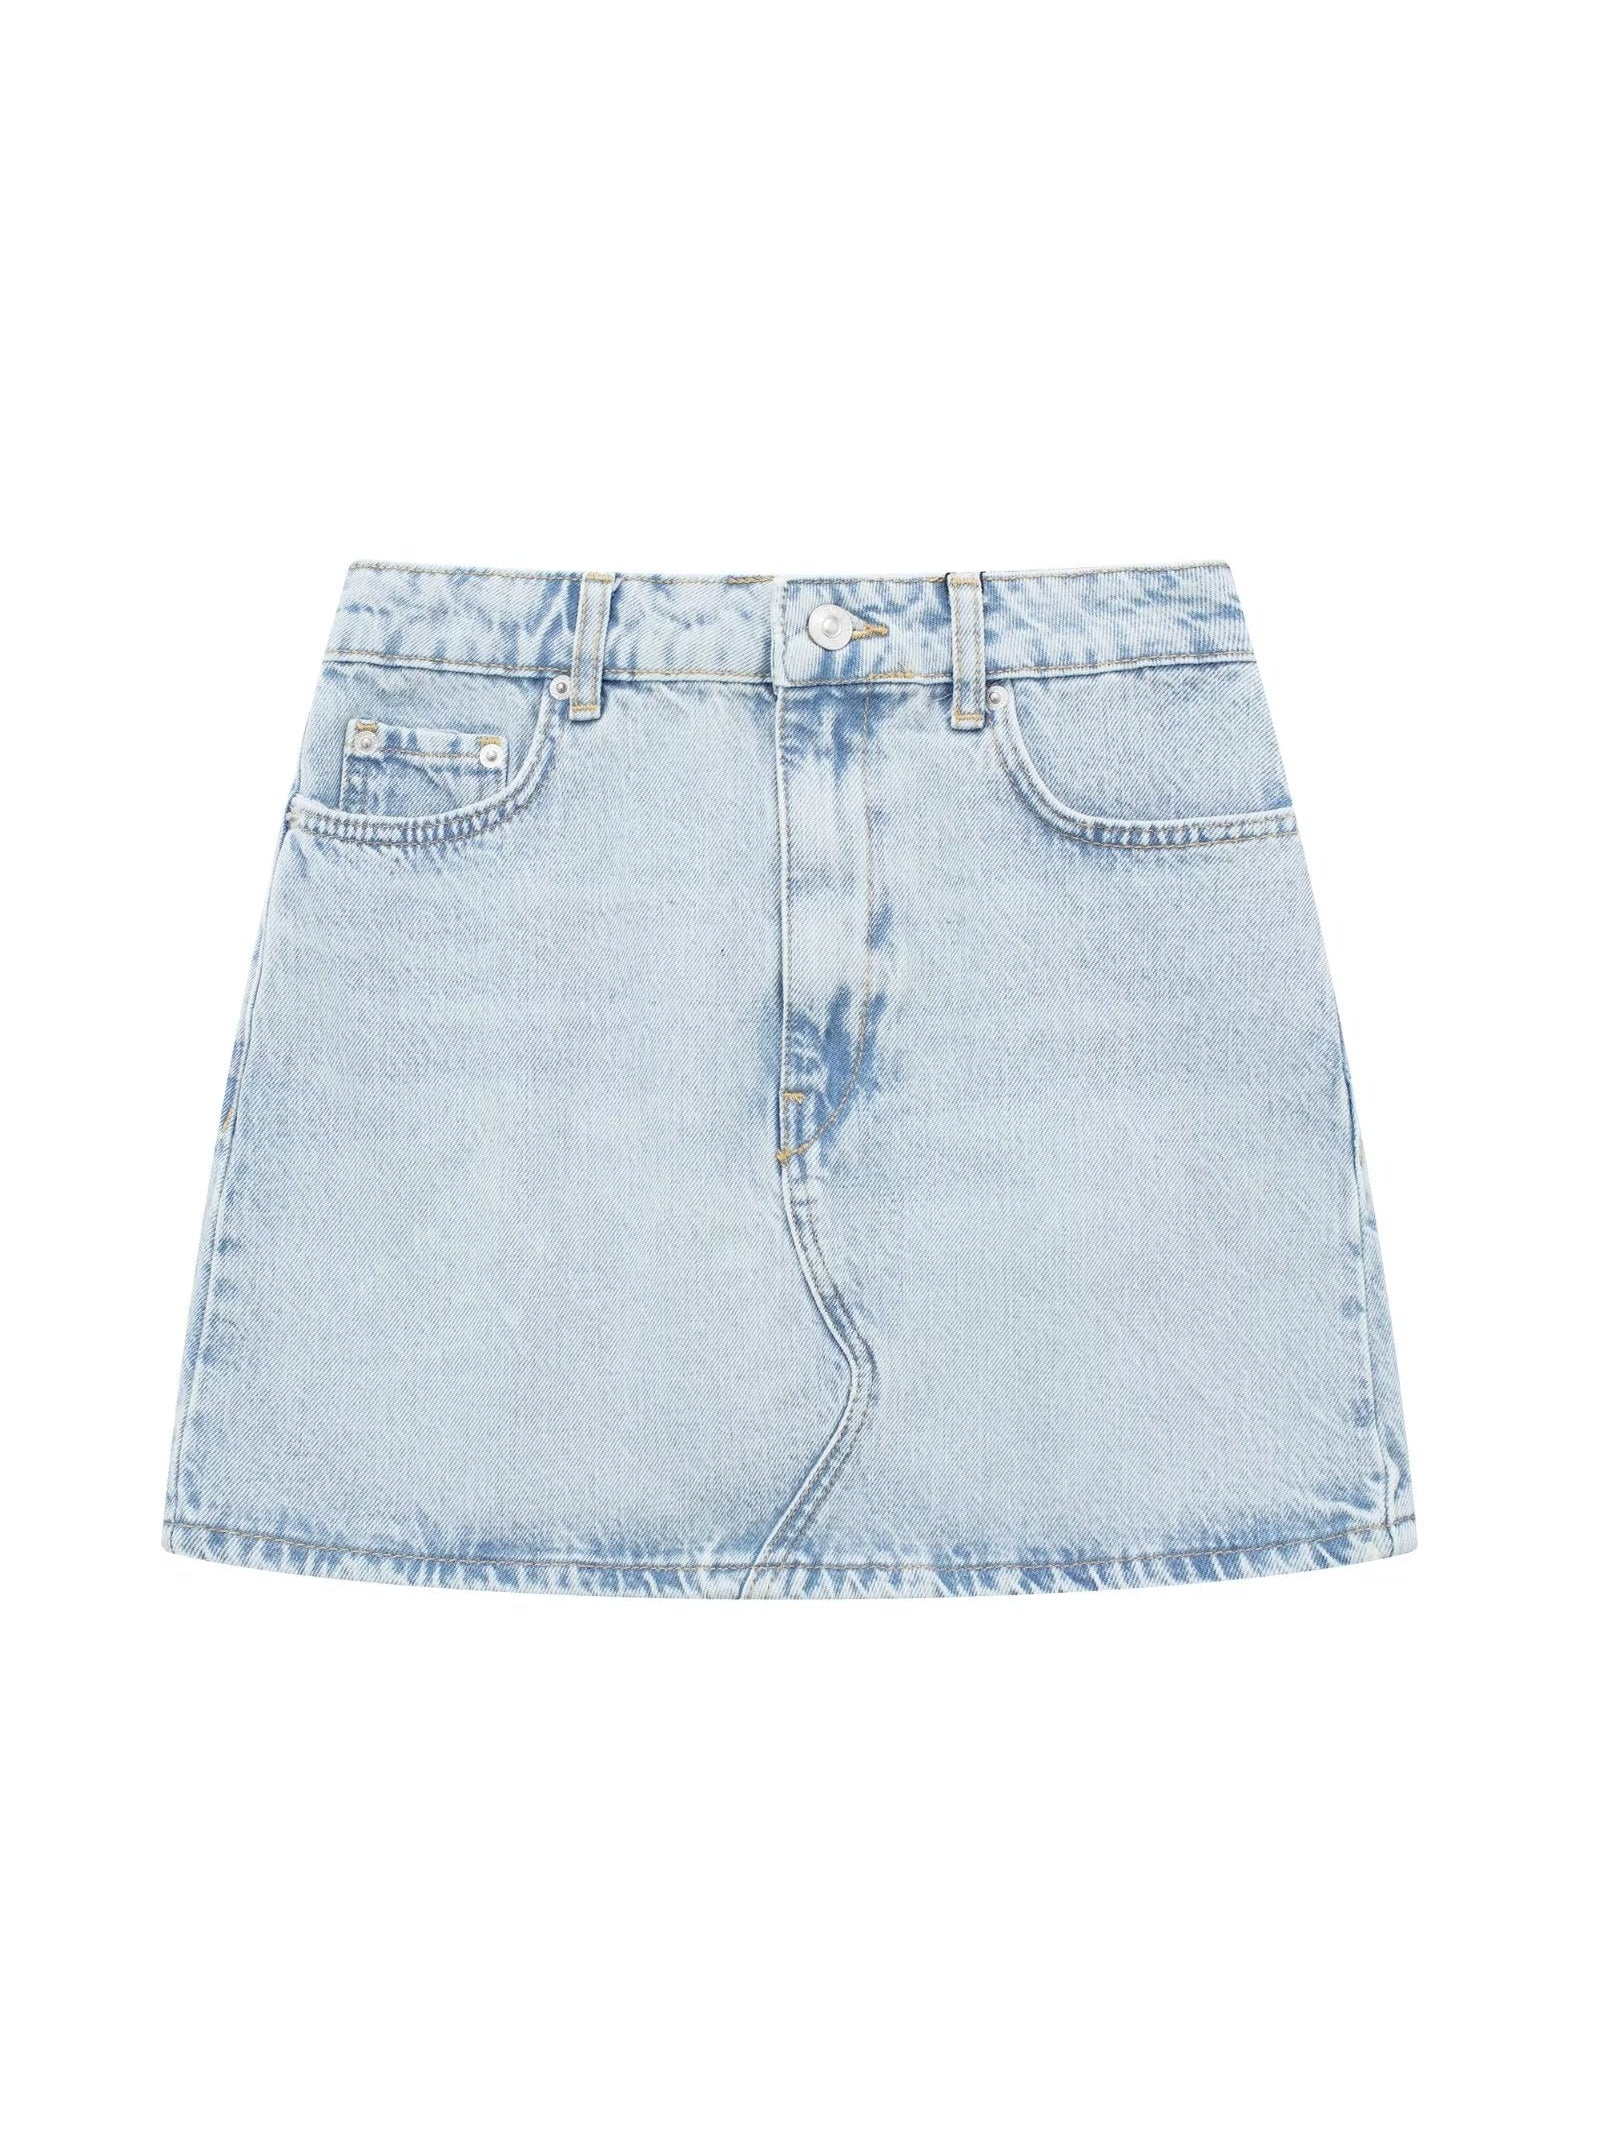 6 Ways to Wear a Jean Skirt - PureWow